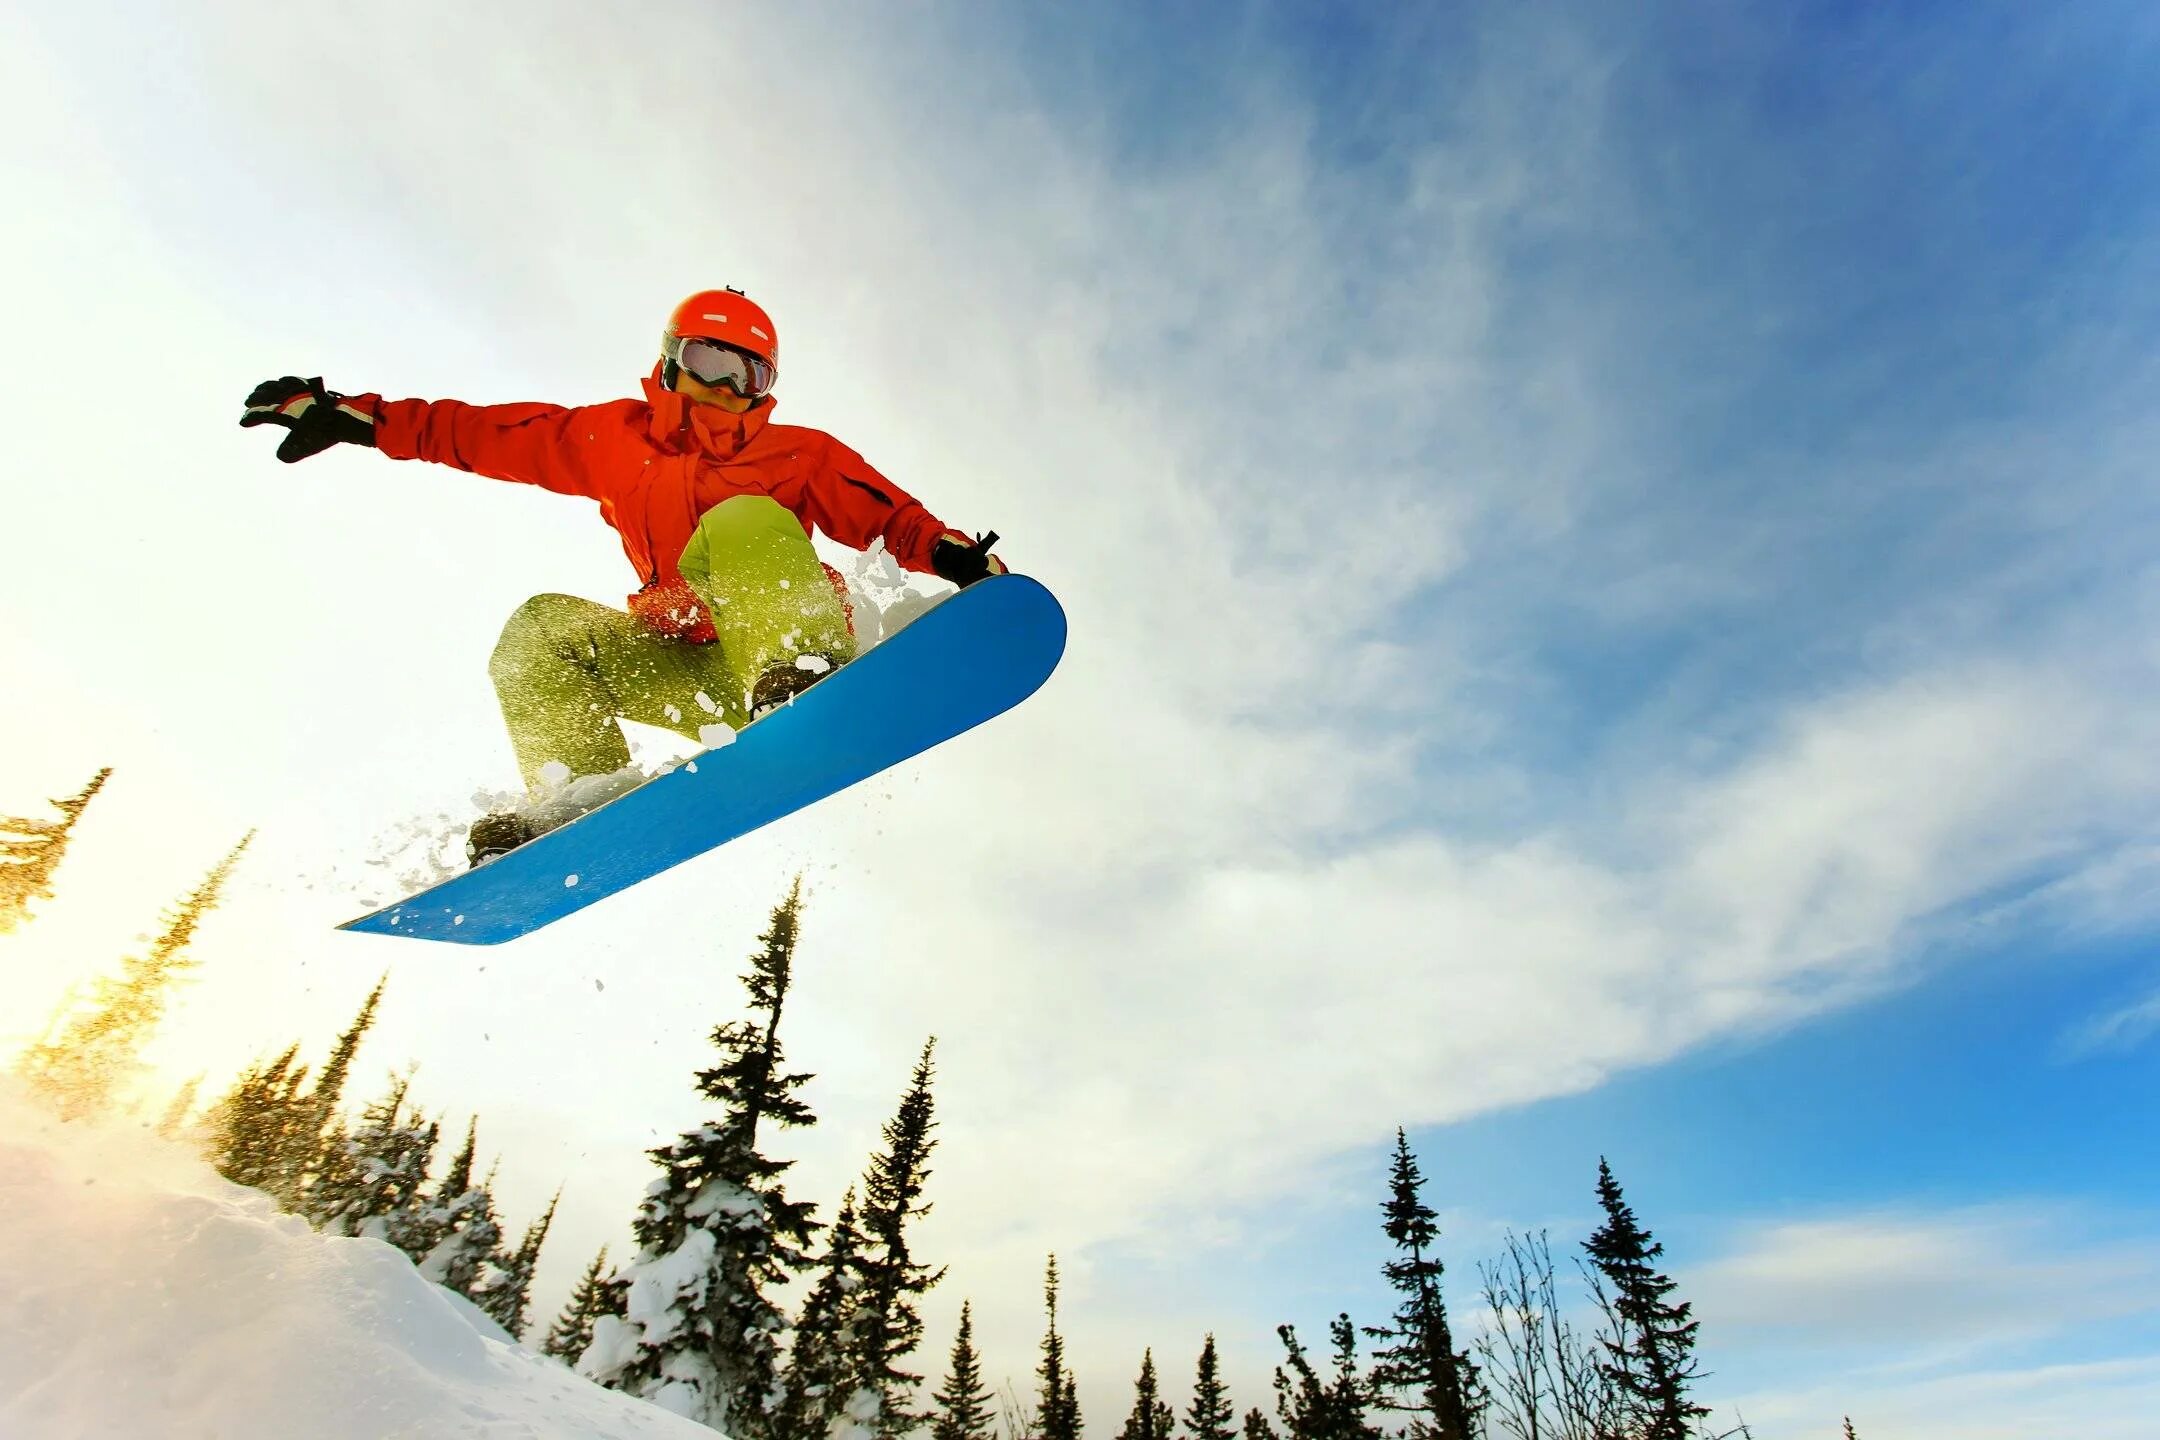 Фристайл сноуборд катания. Трэвис Райс сноубордист. Зимний спорт. Трюки на сноуборде. Snowboarding sport